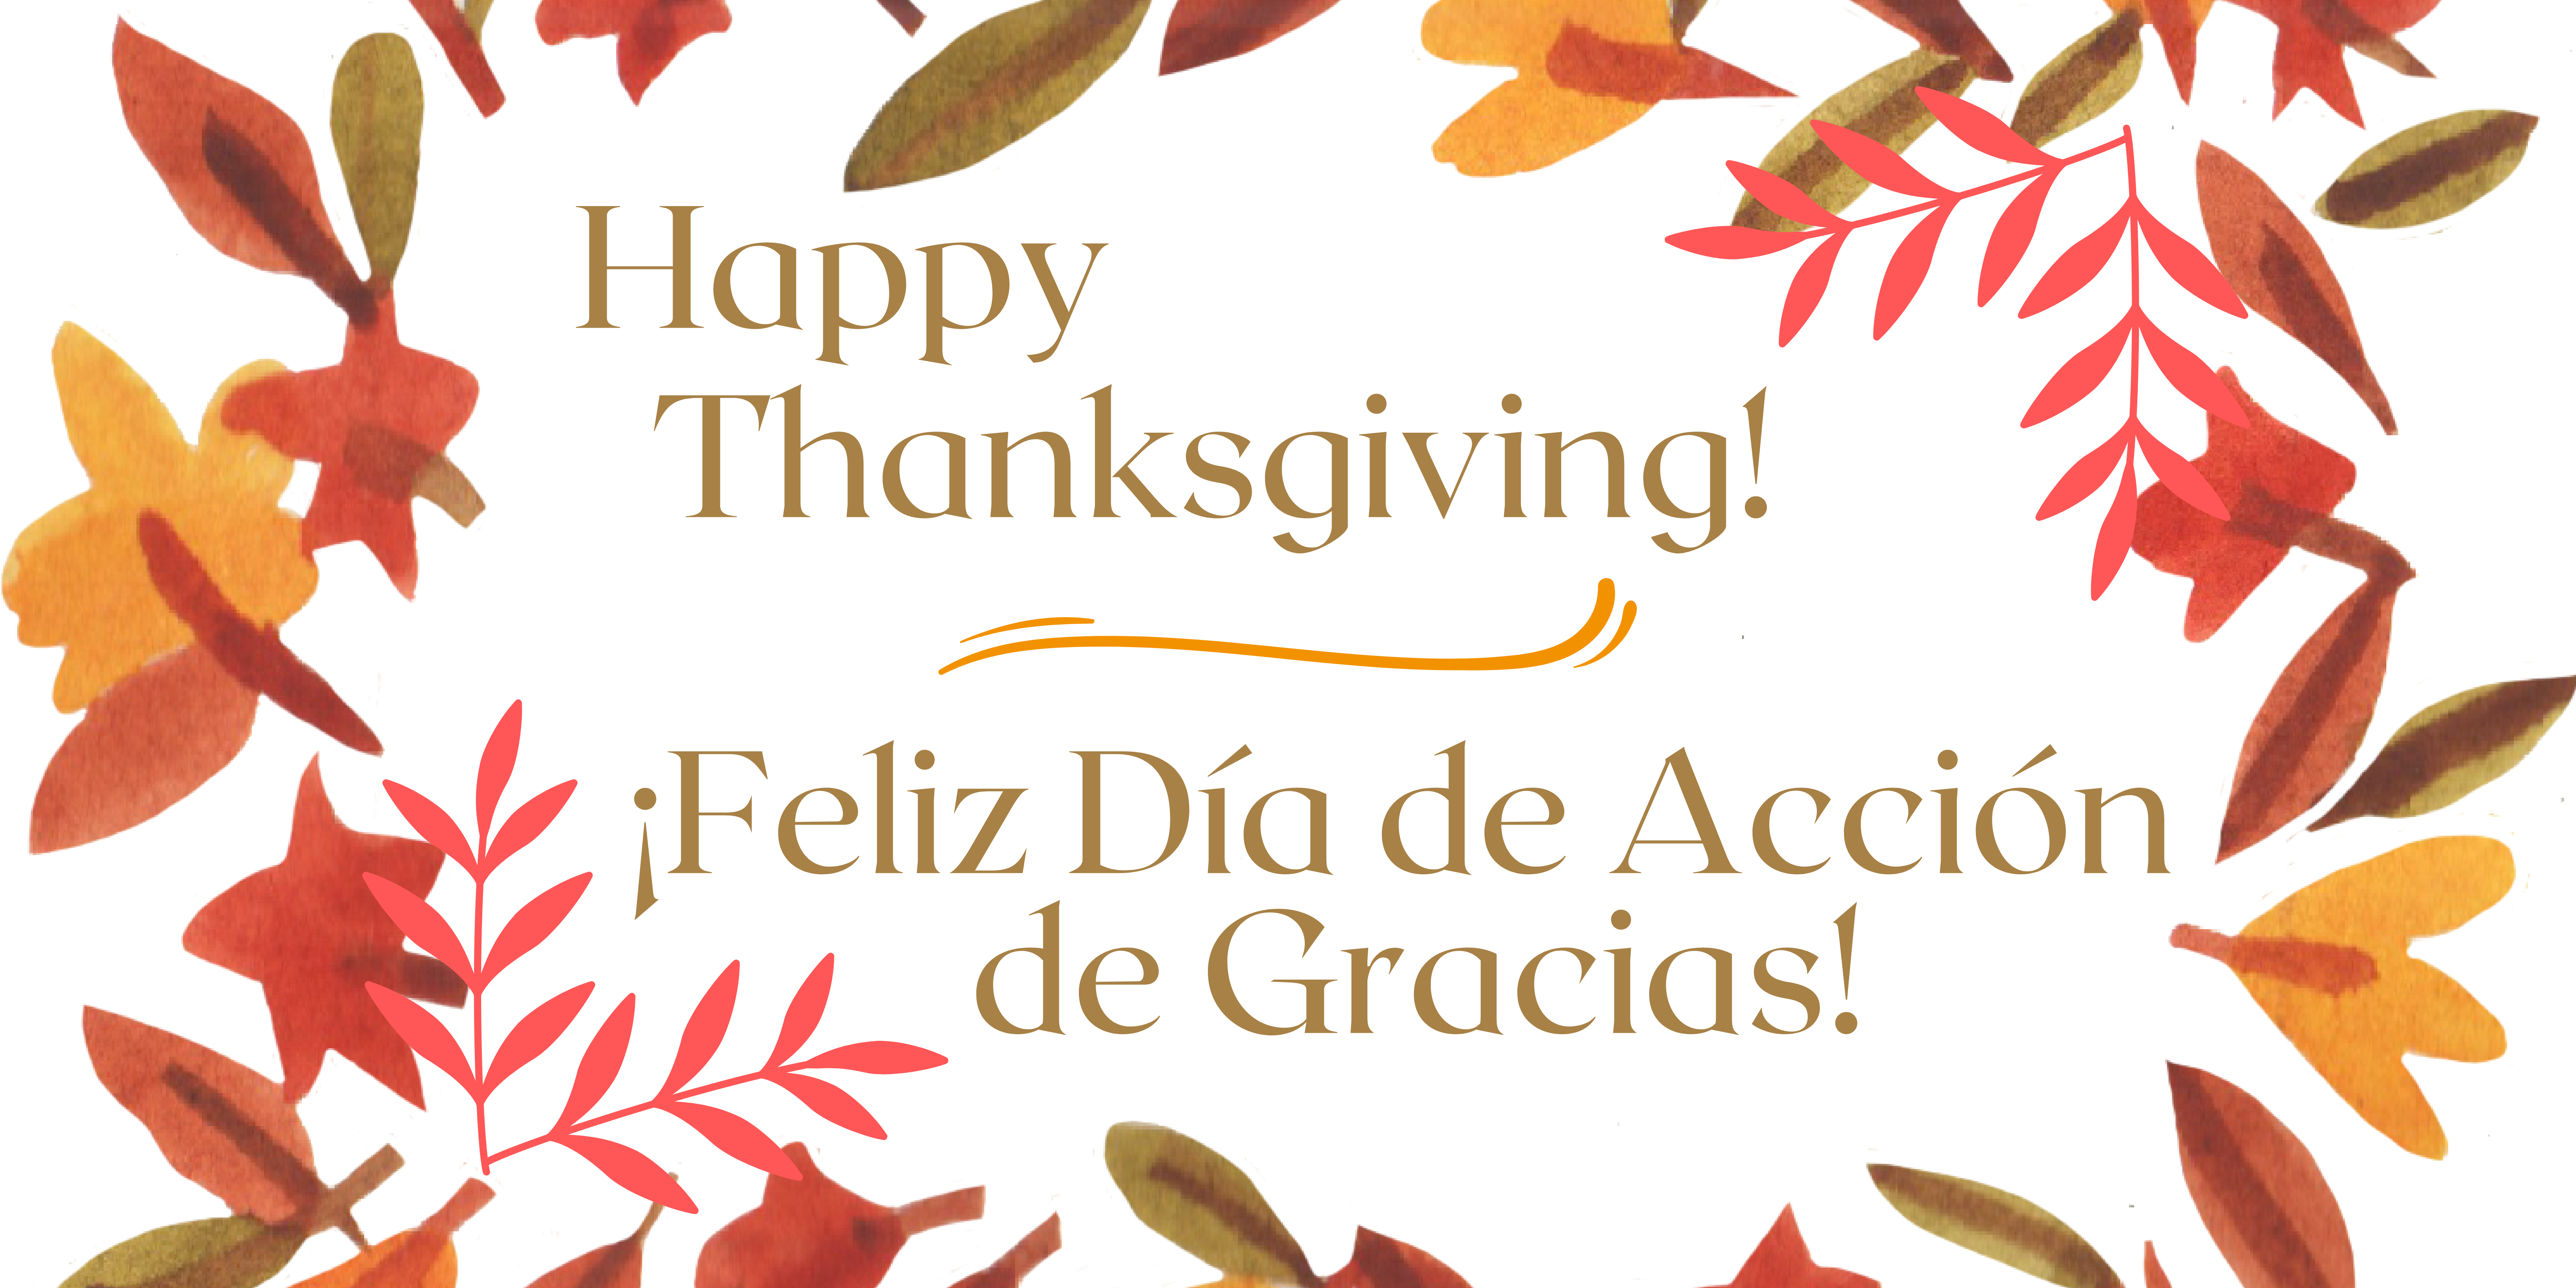 White background with a border of colorful fall leaves. Brown text says, "Happy Thanksgiving!" and "¡Feliz día de acción de gracias!"